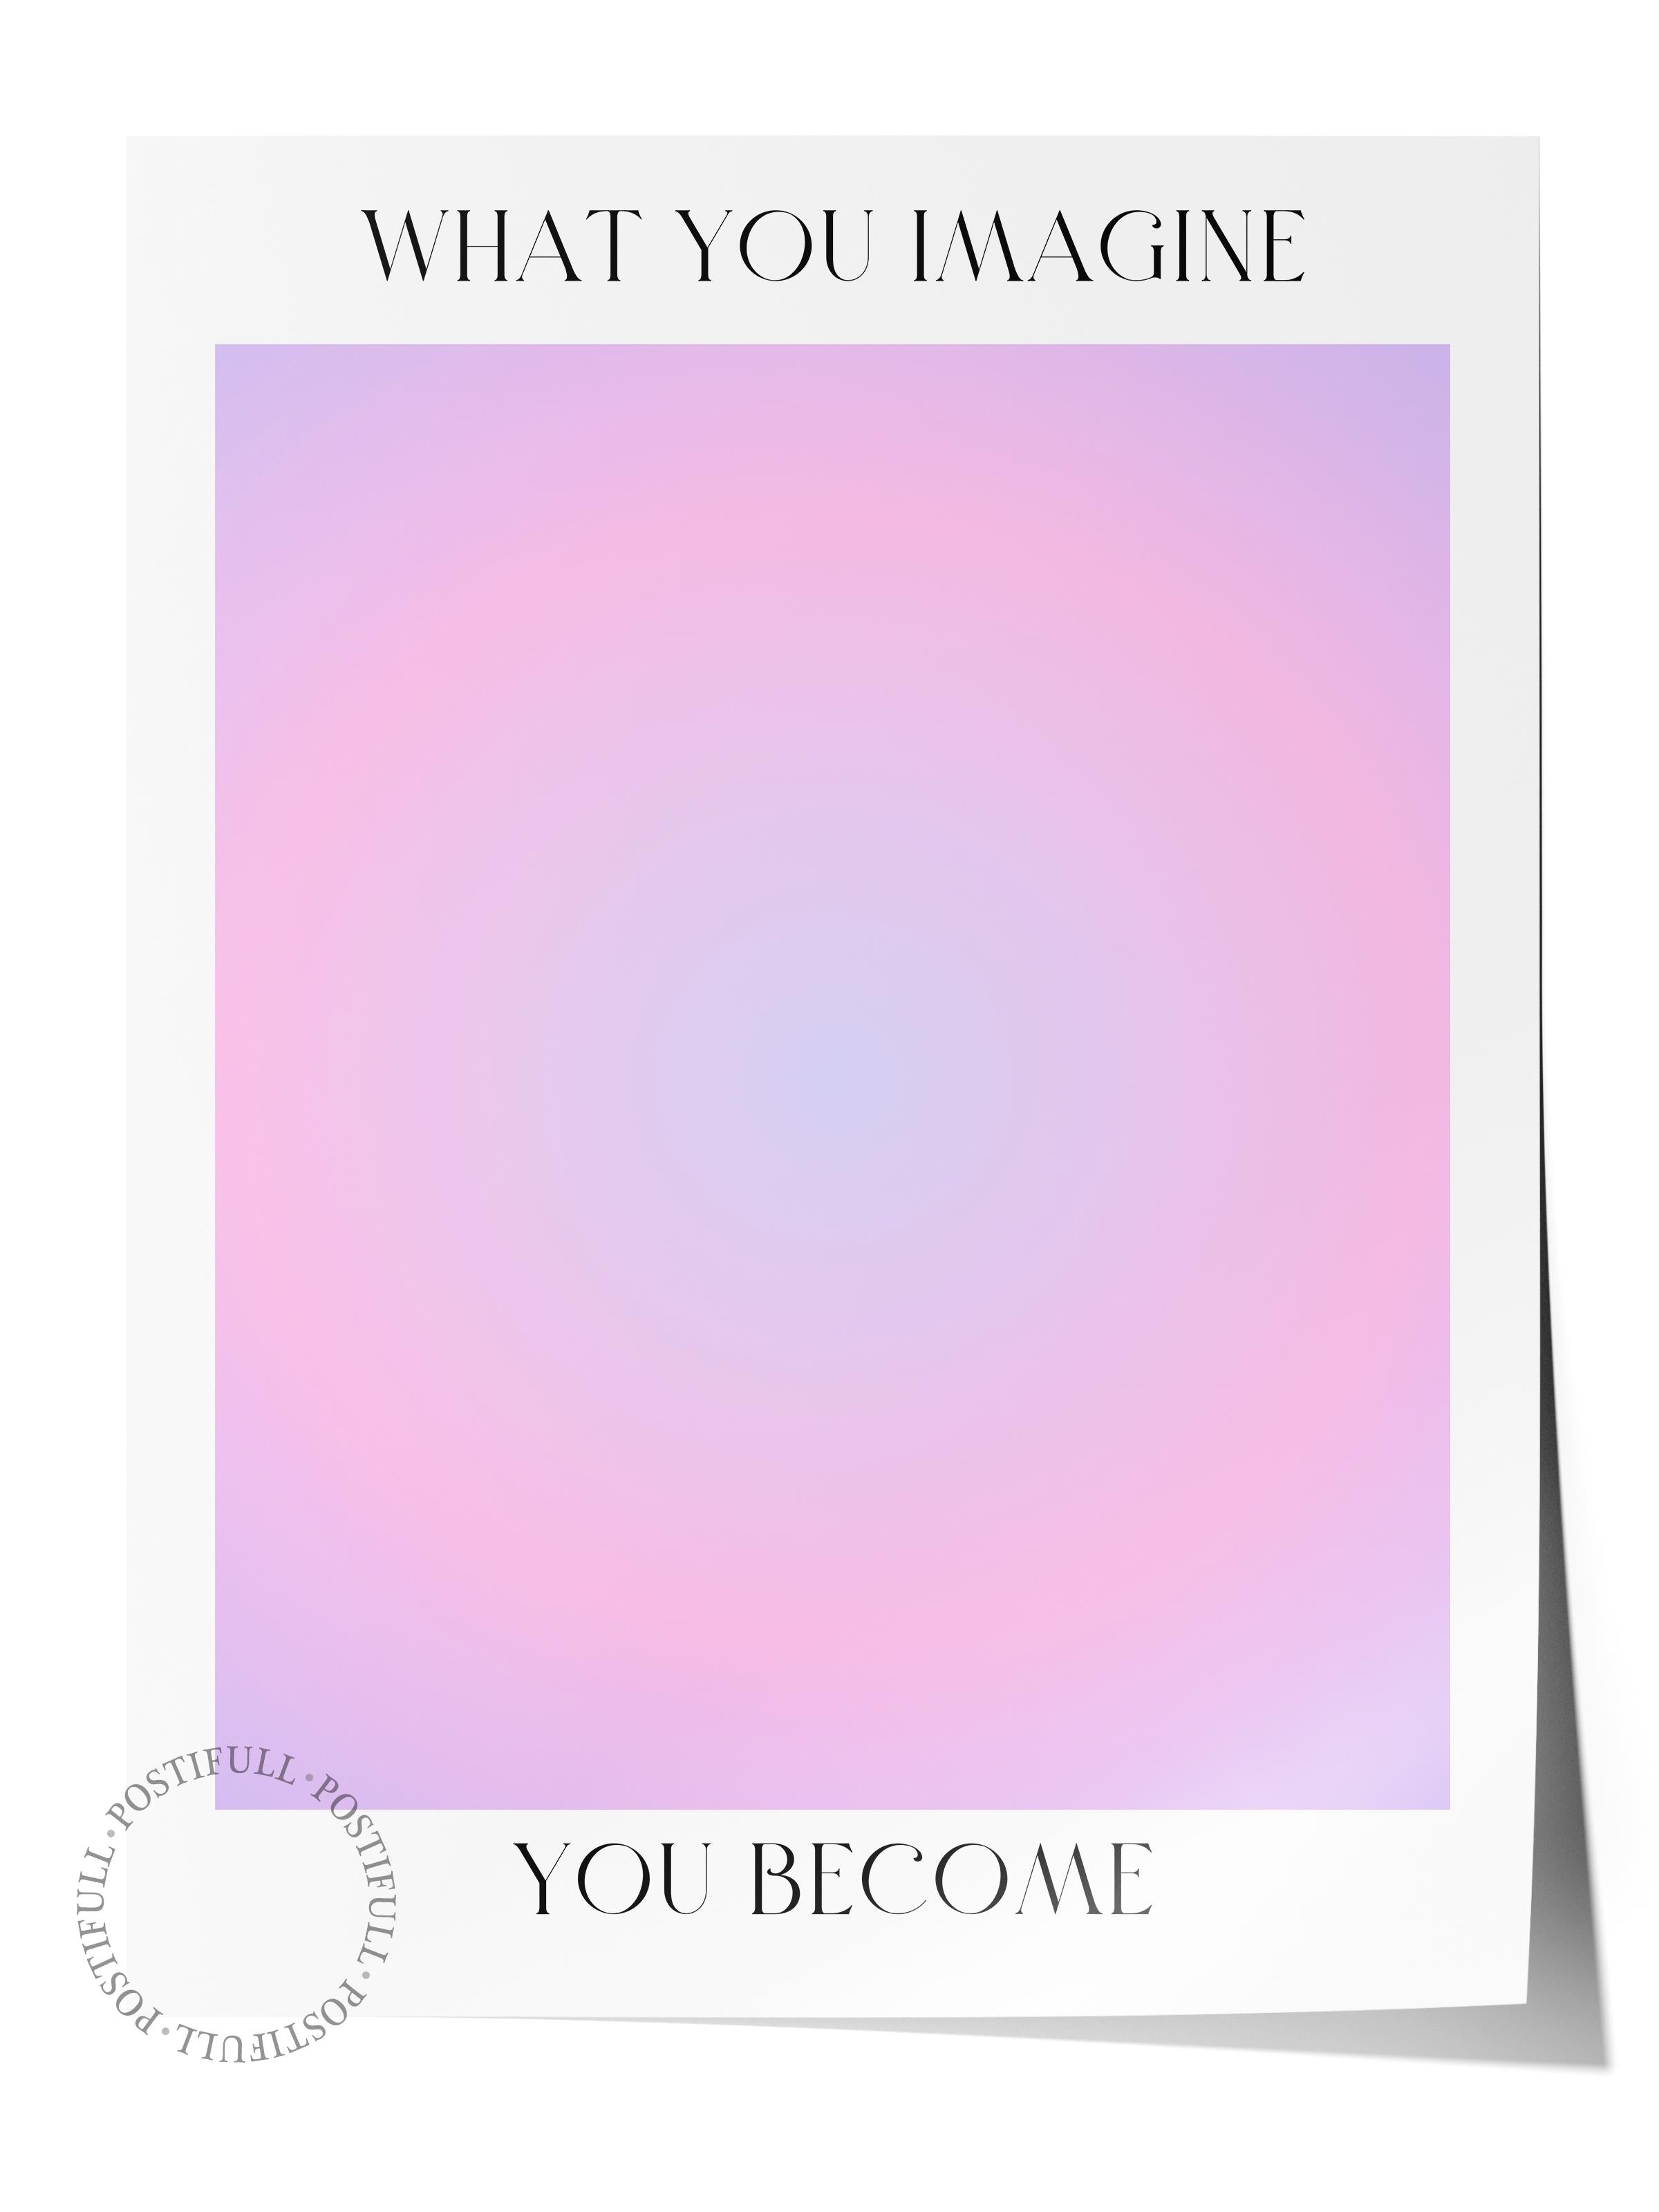 Çerçevesiz Poster, Aura Serisi NO:132 - What You Imagine, You Become, Melek Numaraları, Renkli Poster